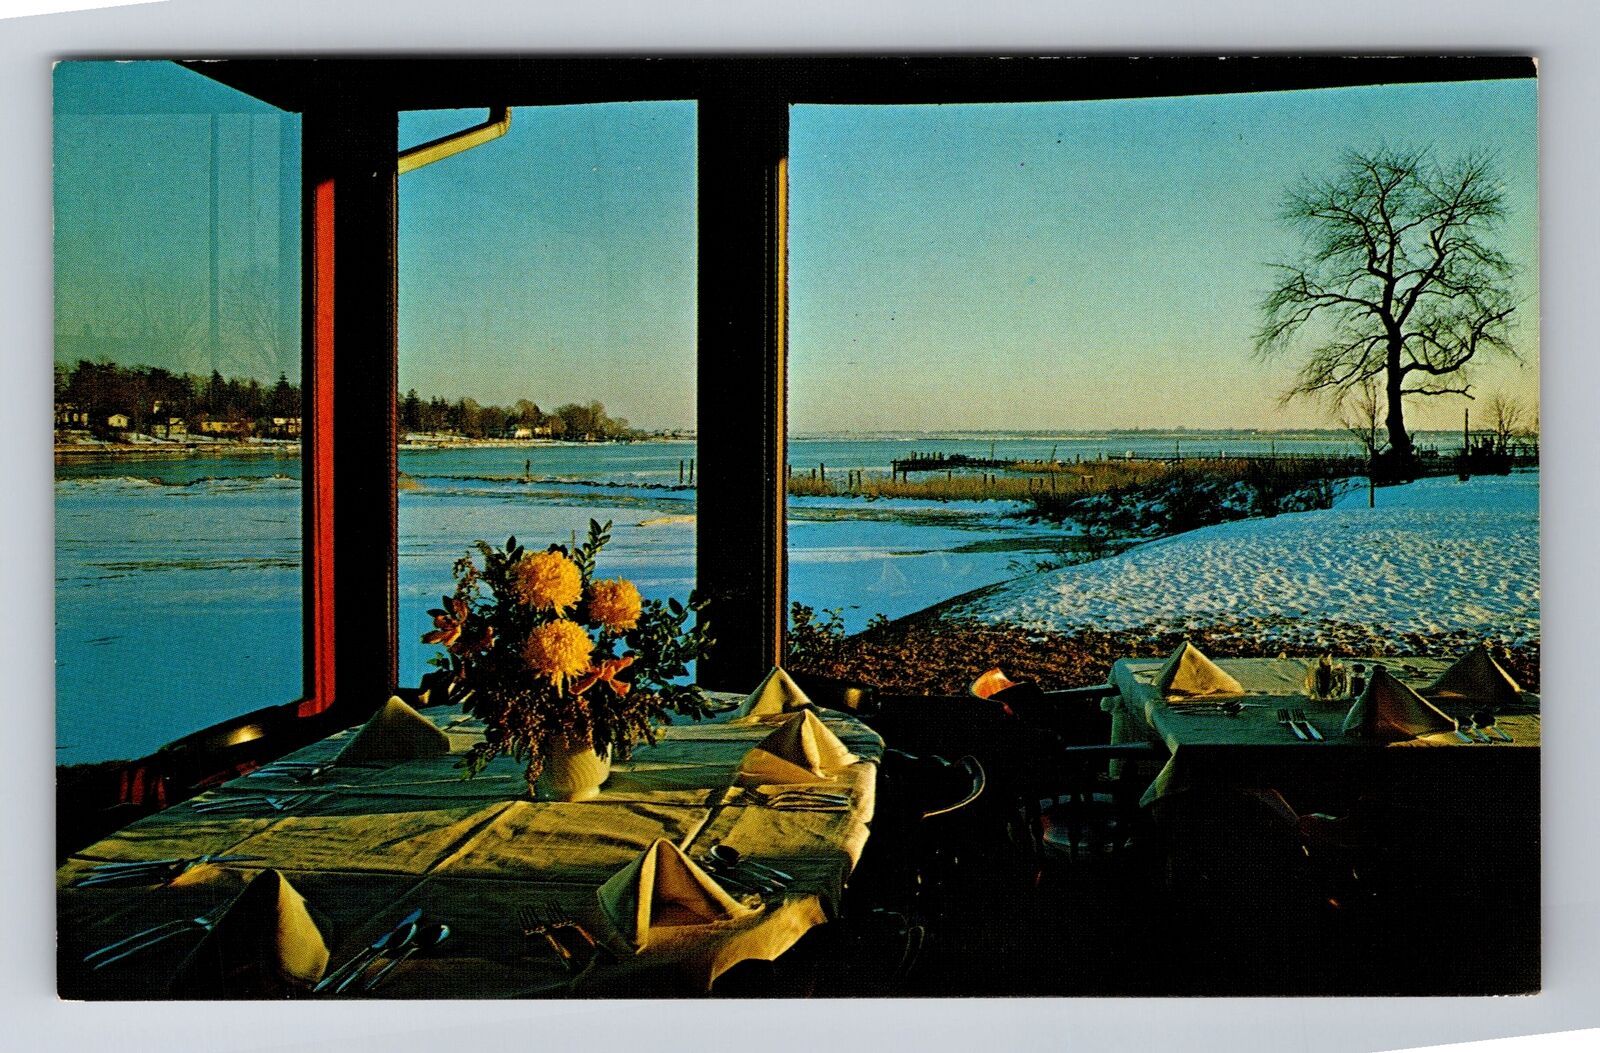 Stratford CT-Connecticut, Fagan's Restaurant, Housatonic River, Vintage Postcard